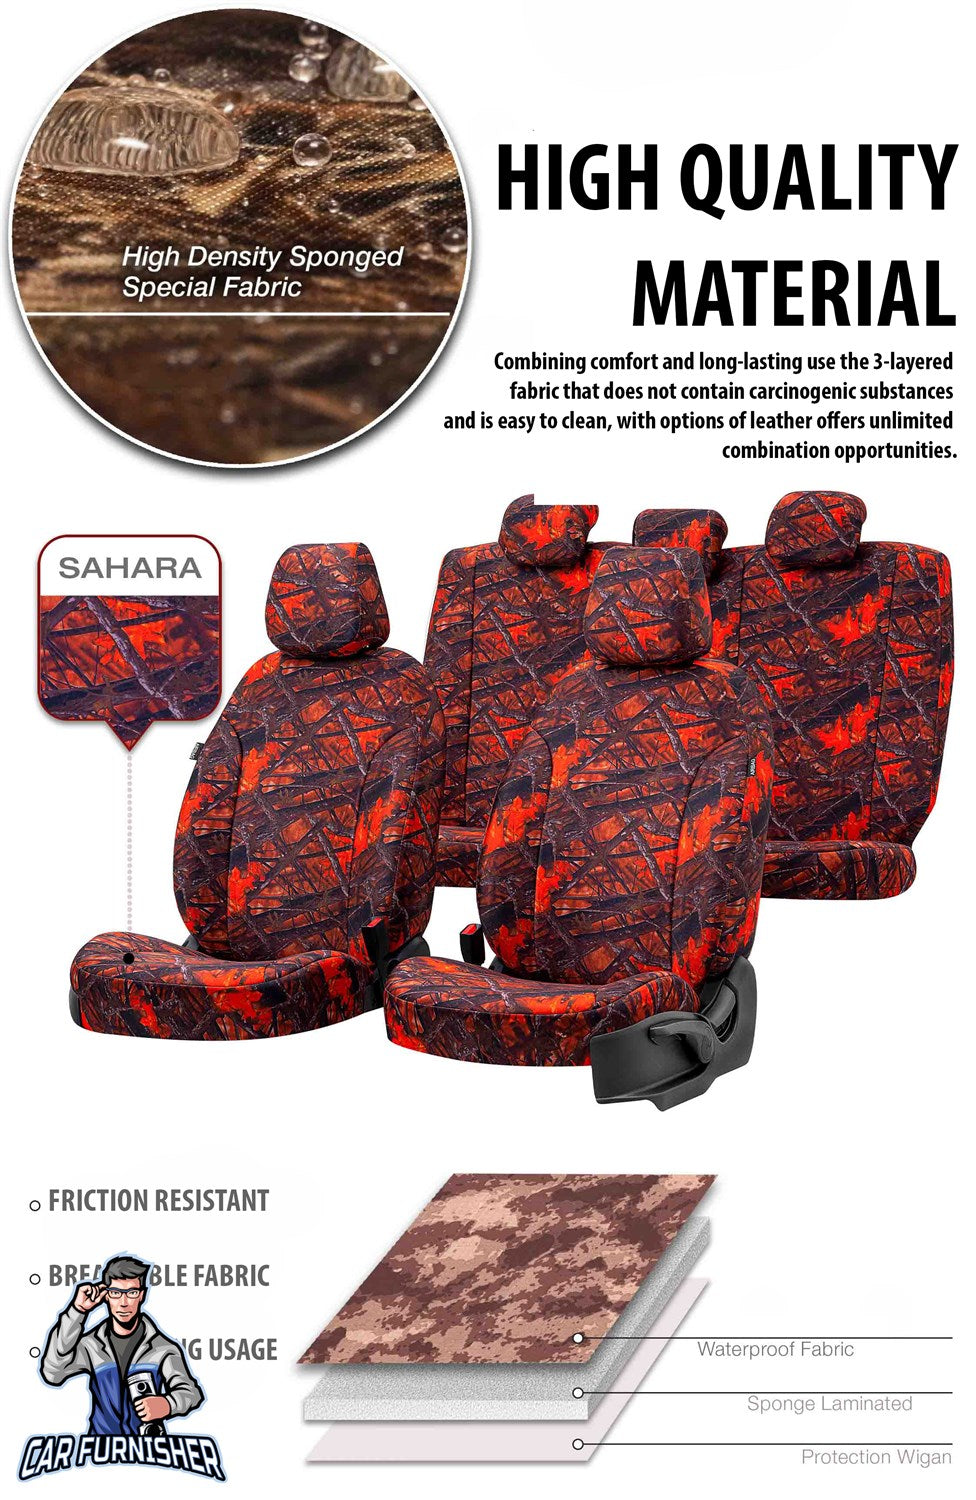 Skoda Superb Seat Covers Camouflage Waterproof Design Everest Camo Waterproof Fabric